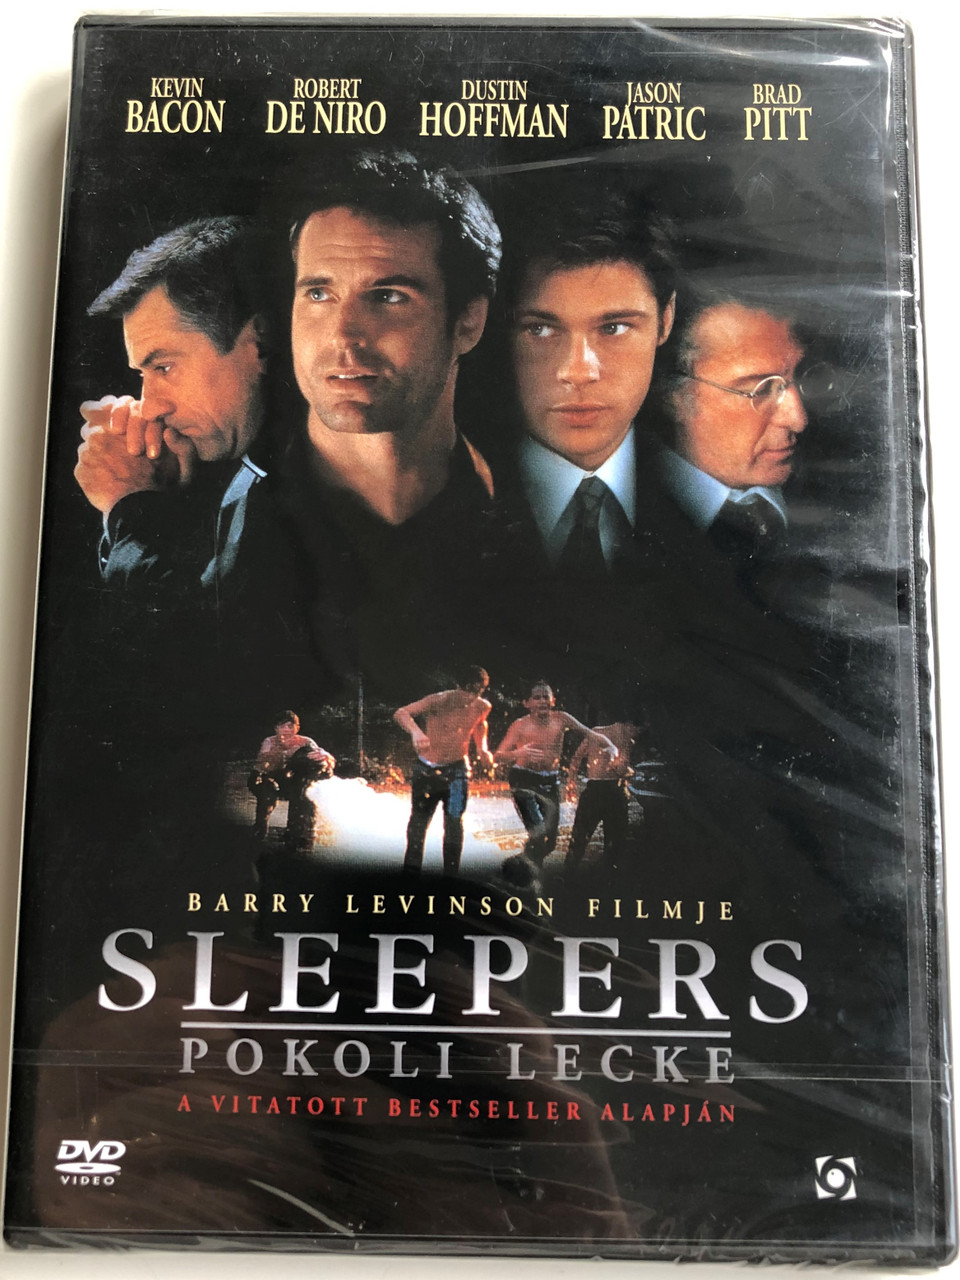 Sleepers DVD 1996 Pokoli Lecke / Directed by Barry Levinson / Starring: Kevin  Bacon, Robert De Niro, Dustin Hoffman, Bruno Kirby, Jason Patric, Brad Pitt  - bibleinmylanguage